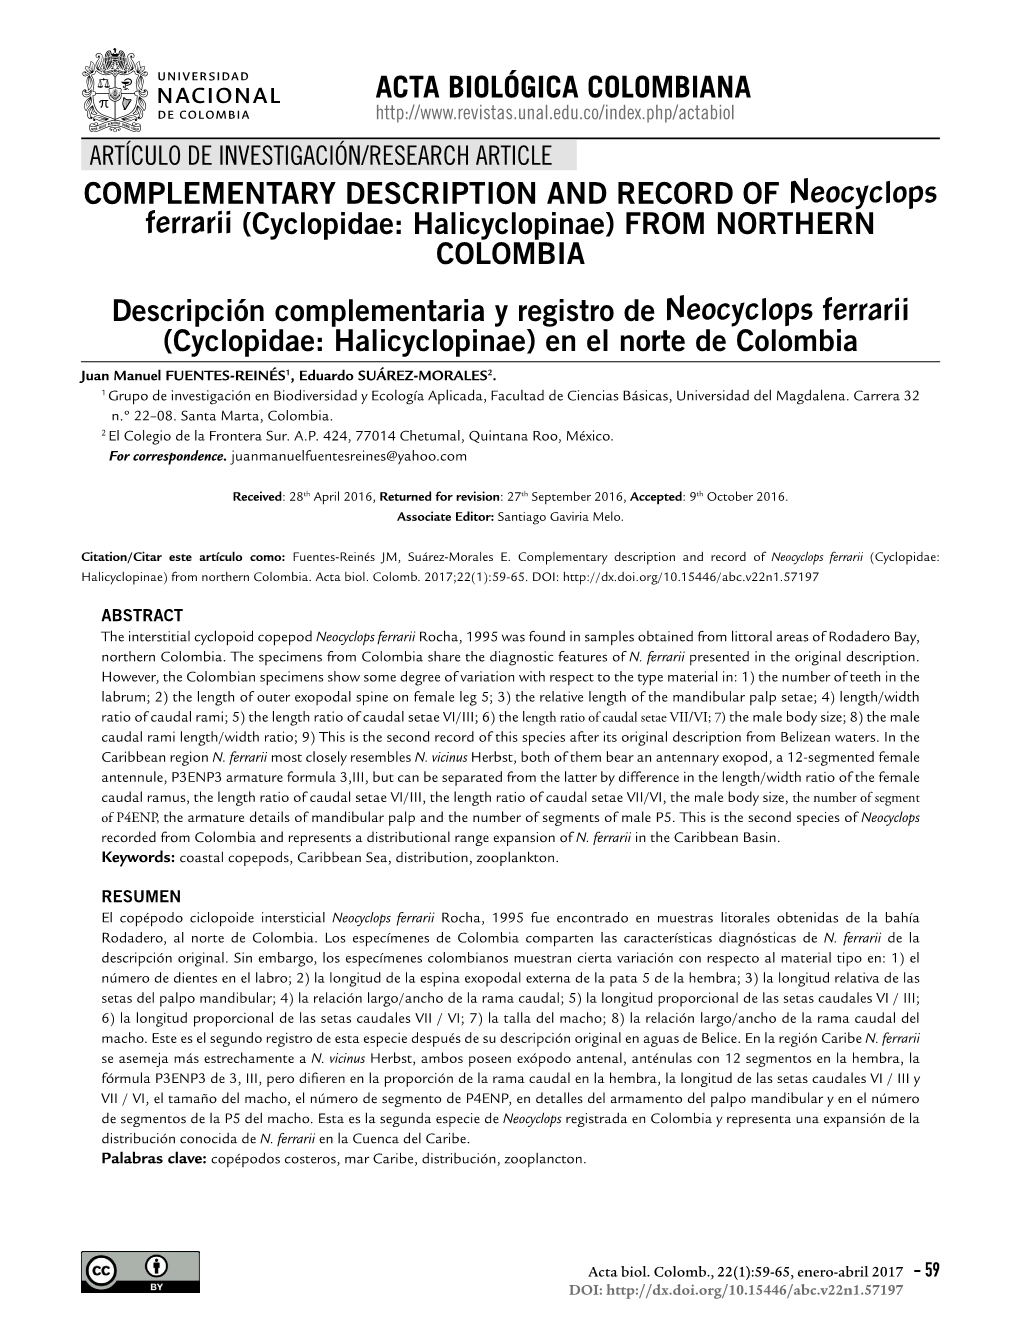 Cyclopidae: Halicyclopinae